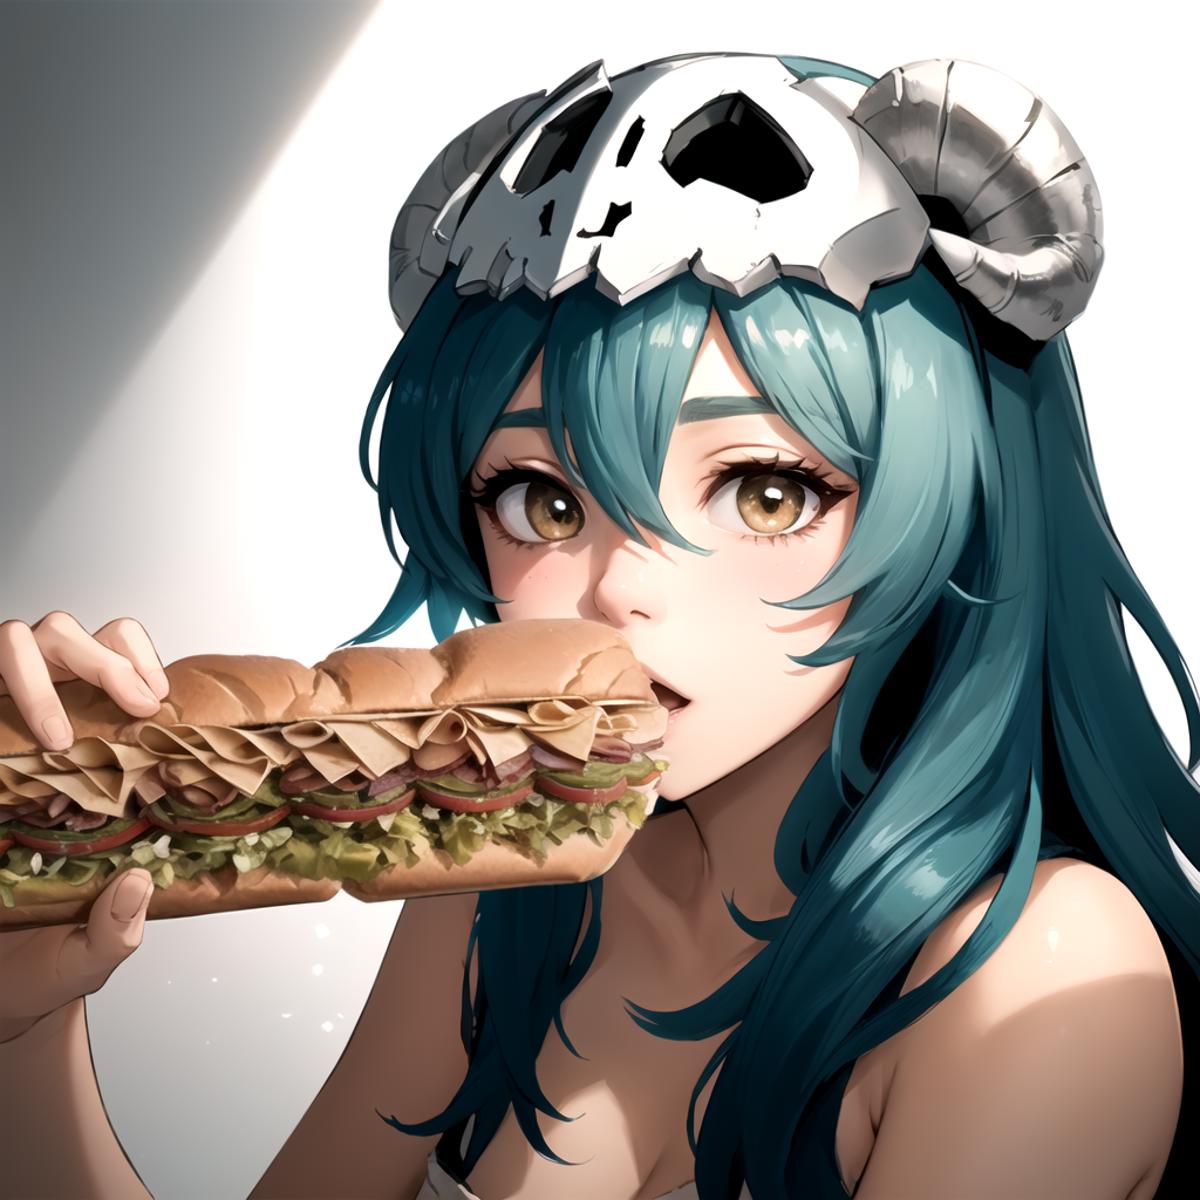 Eatfresh the delicious sandwich model image by Sunbutt